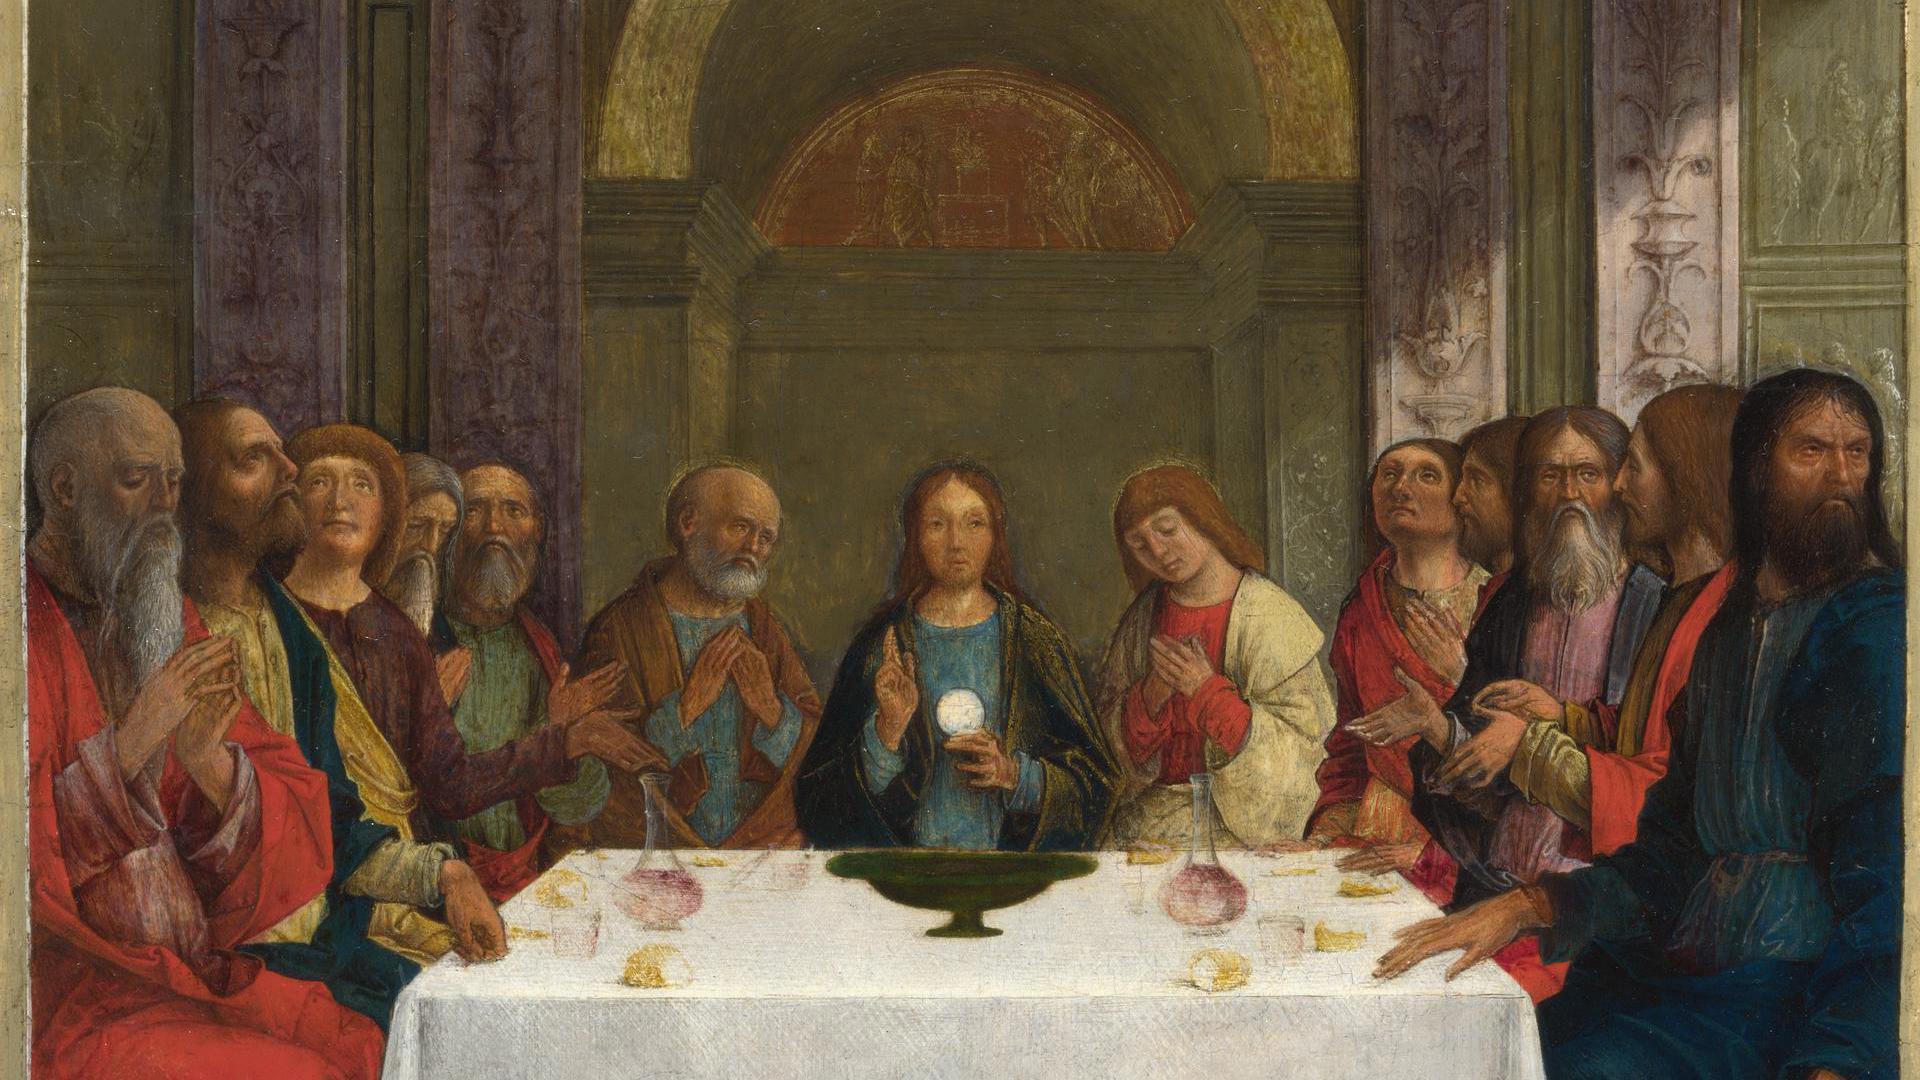 The Institution of the Eucharist by Ercole de' Roberti